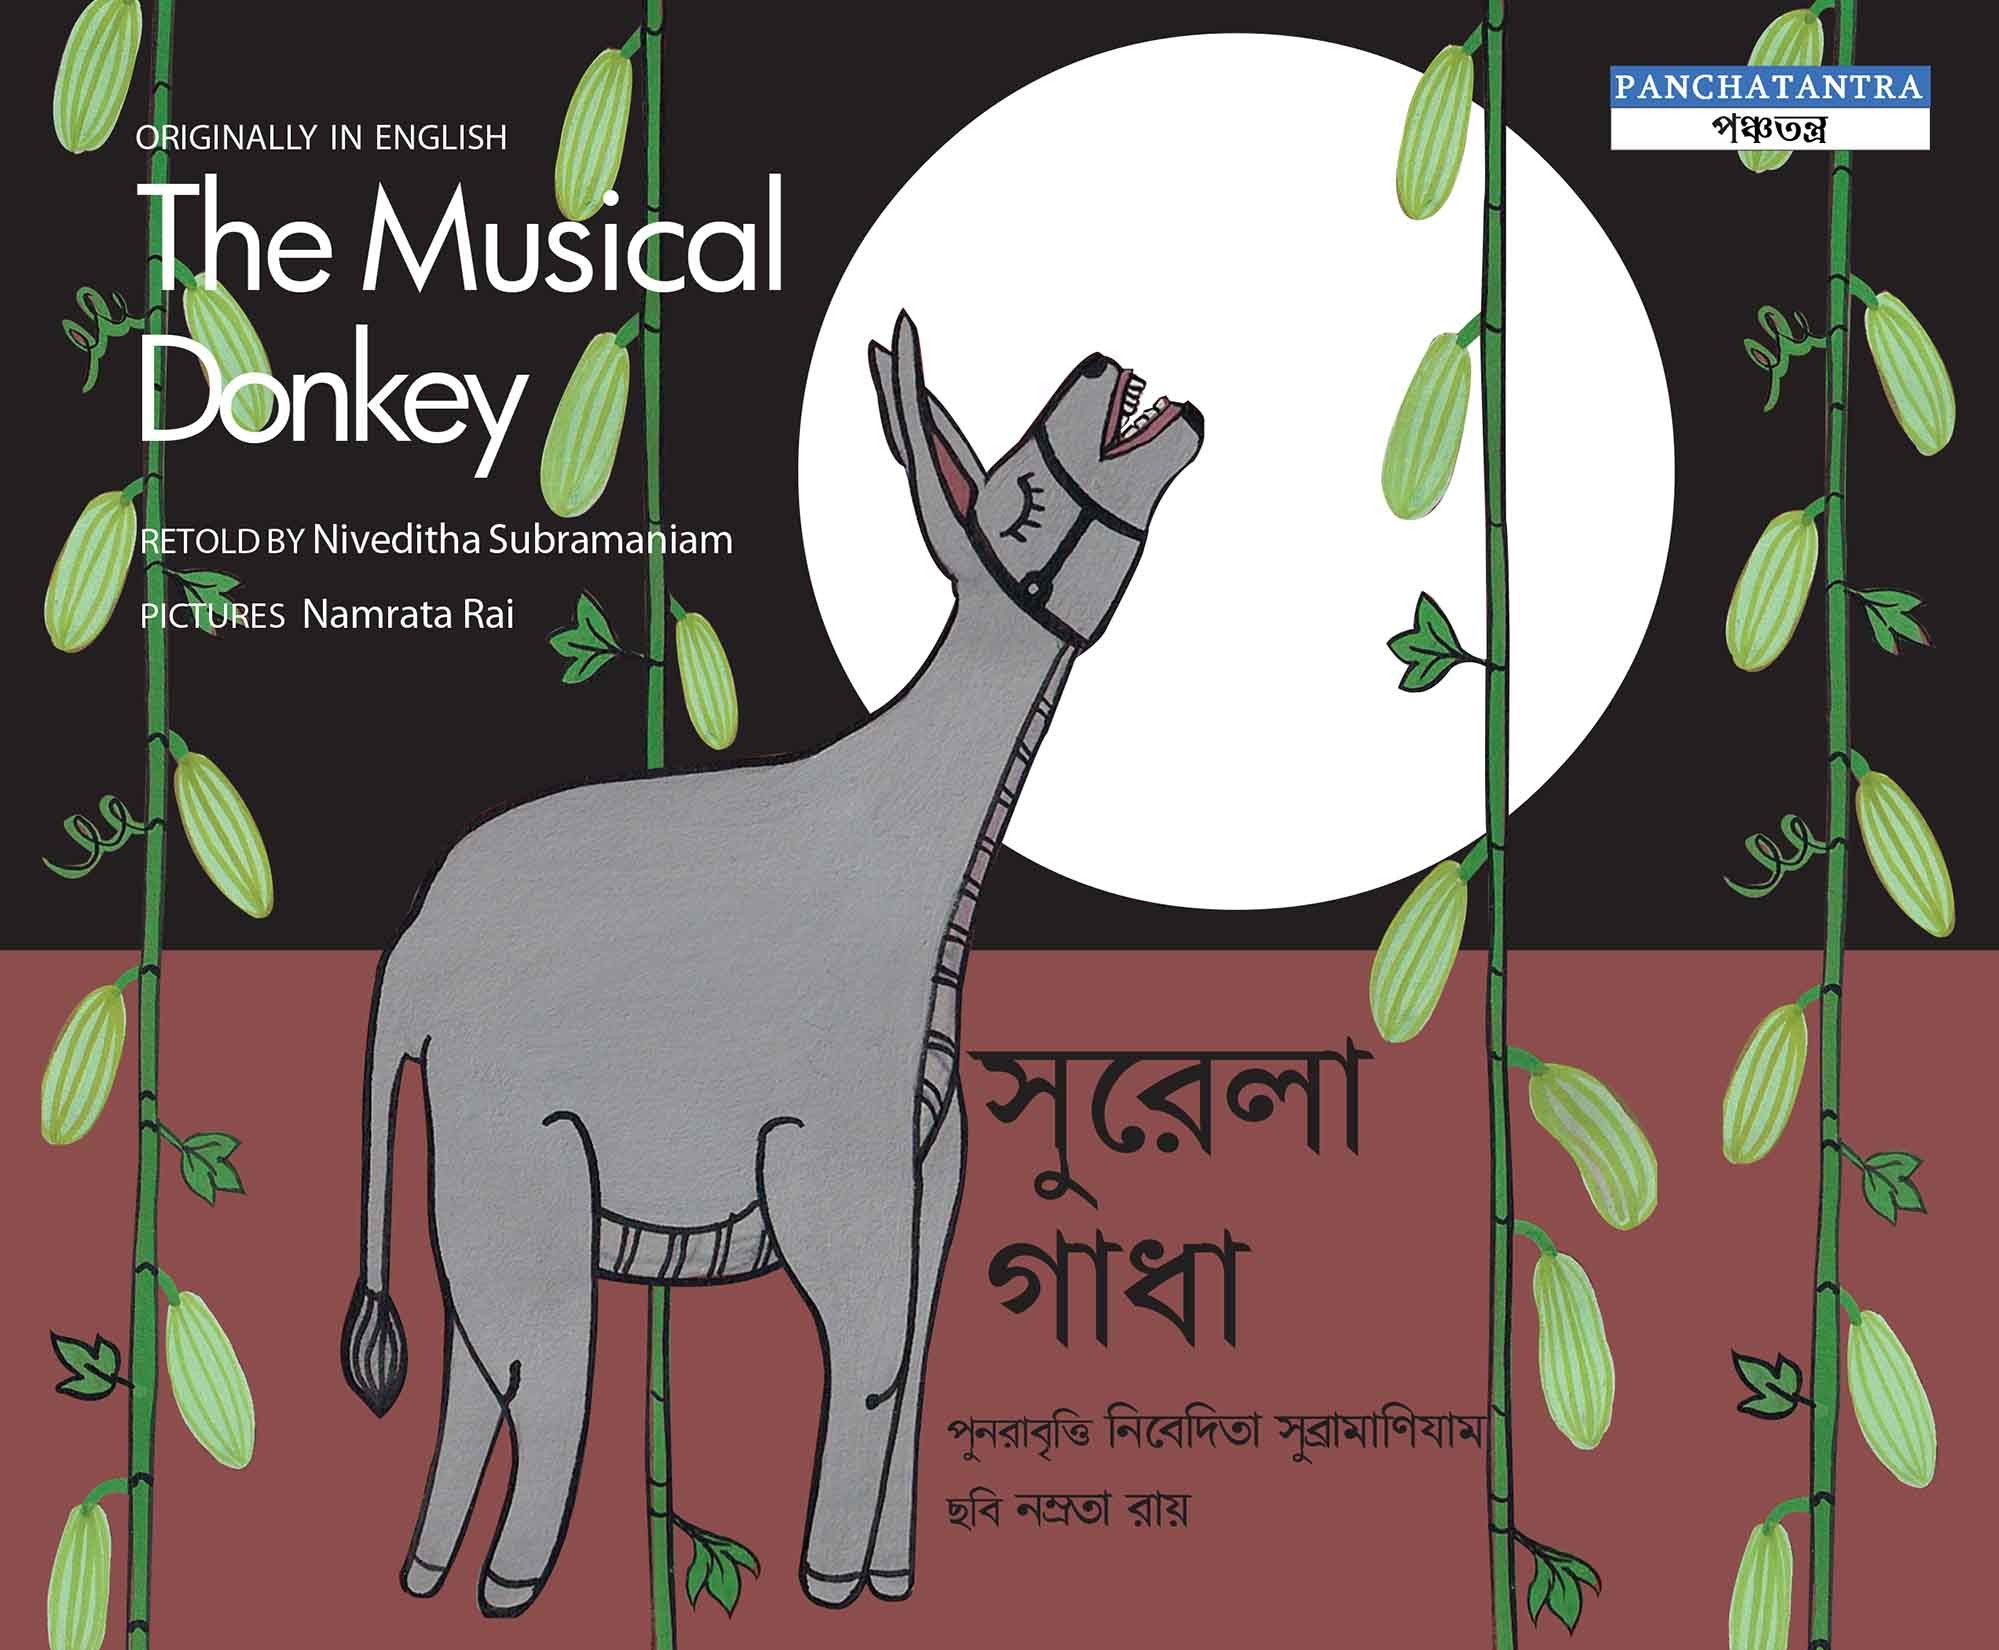 The Musical Donkey/Shurela Gadha (English-Bengali)